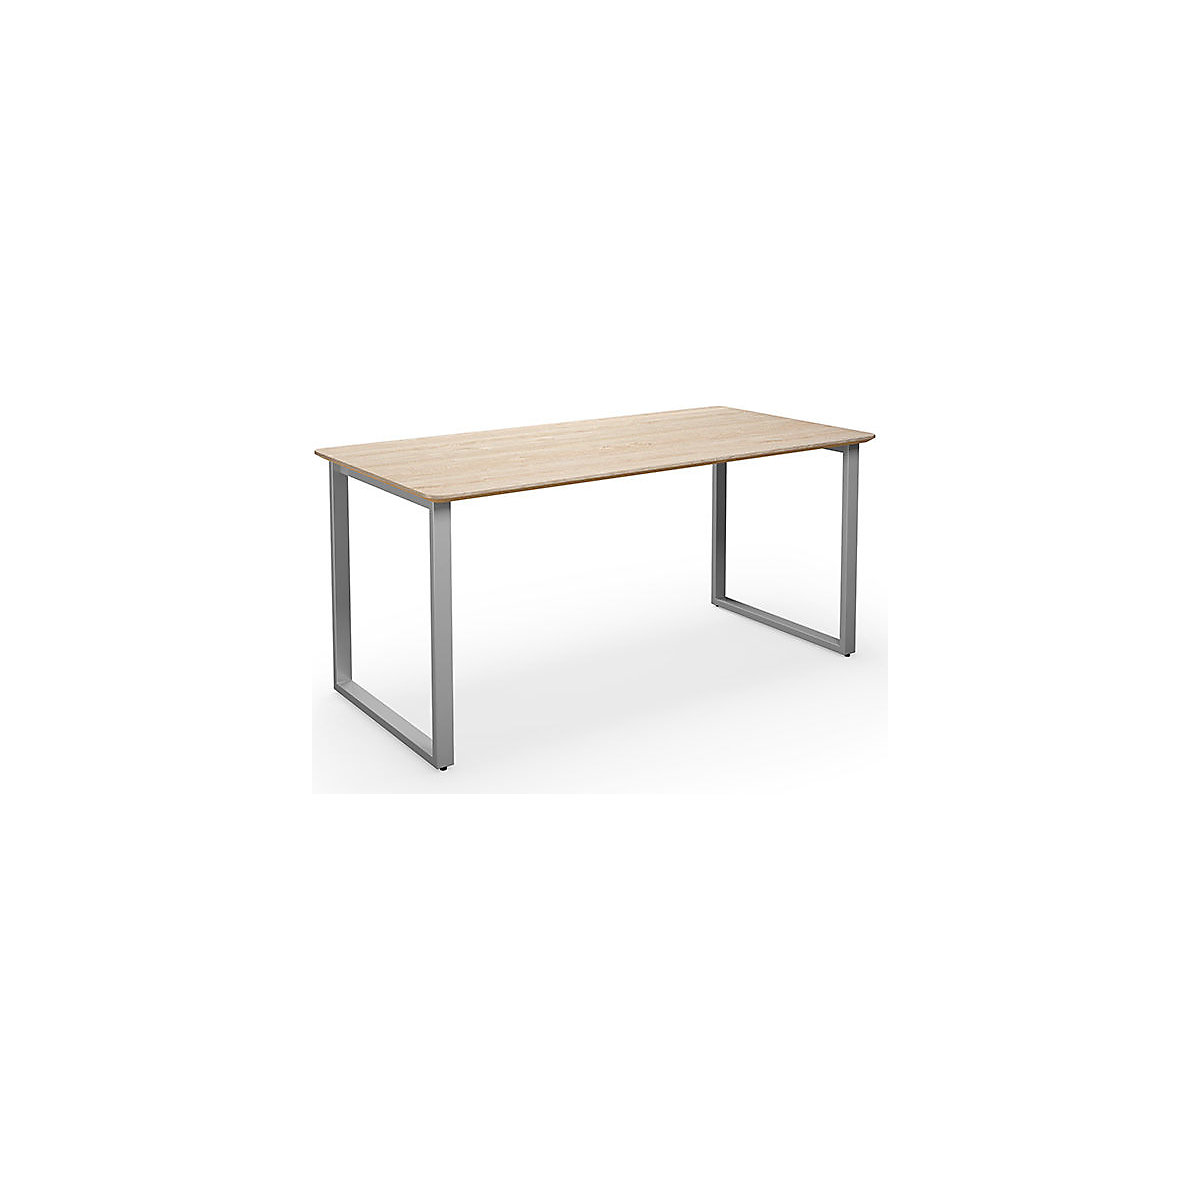 DUO-O Trend multi-purpose desk, straight tabletop, rounded corners, WxD 1600 x 800 mm, oak, silver-2